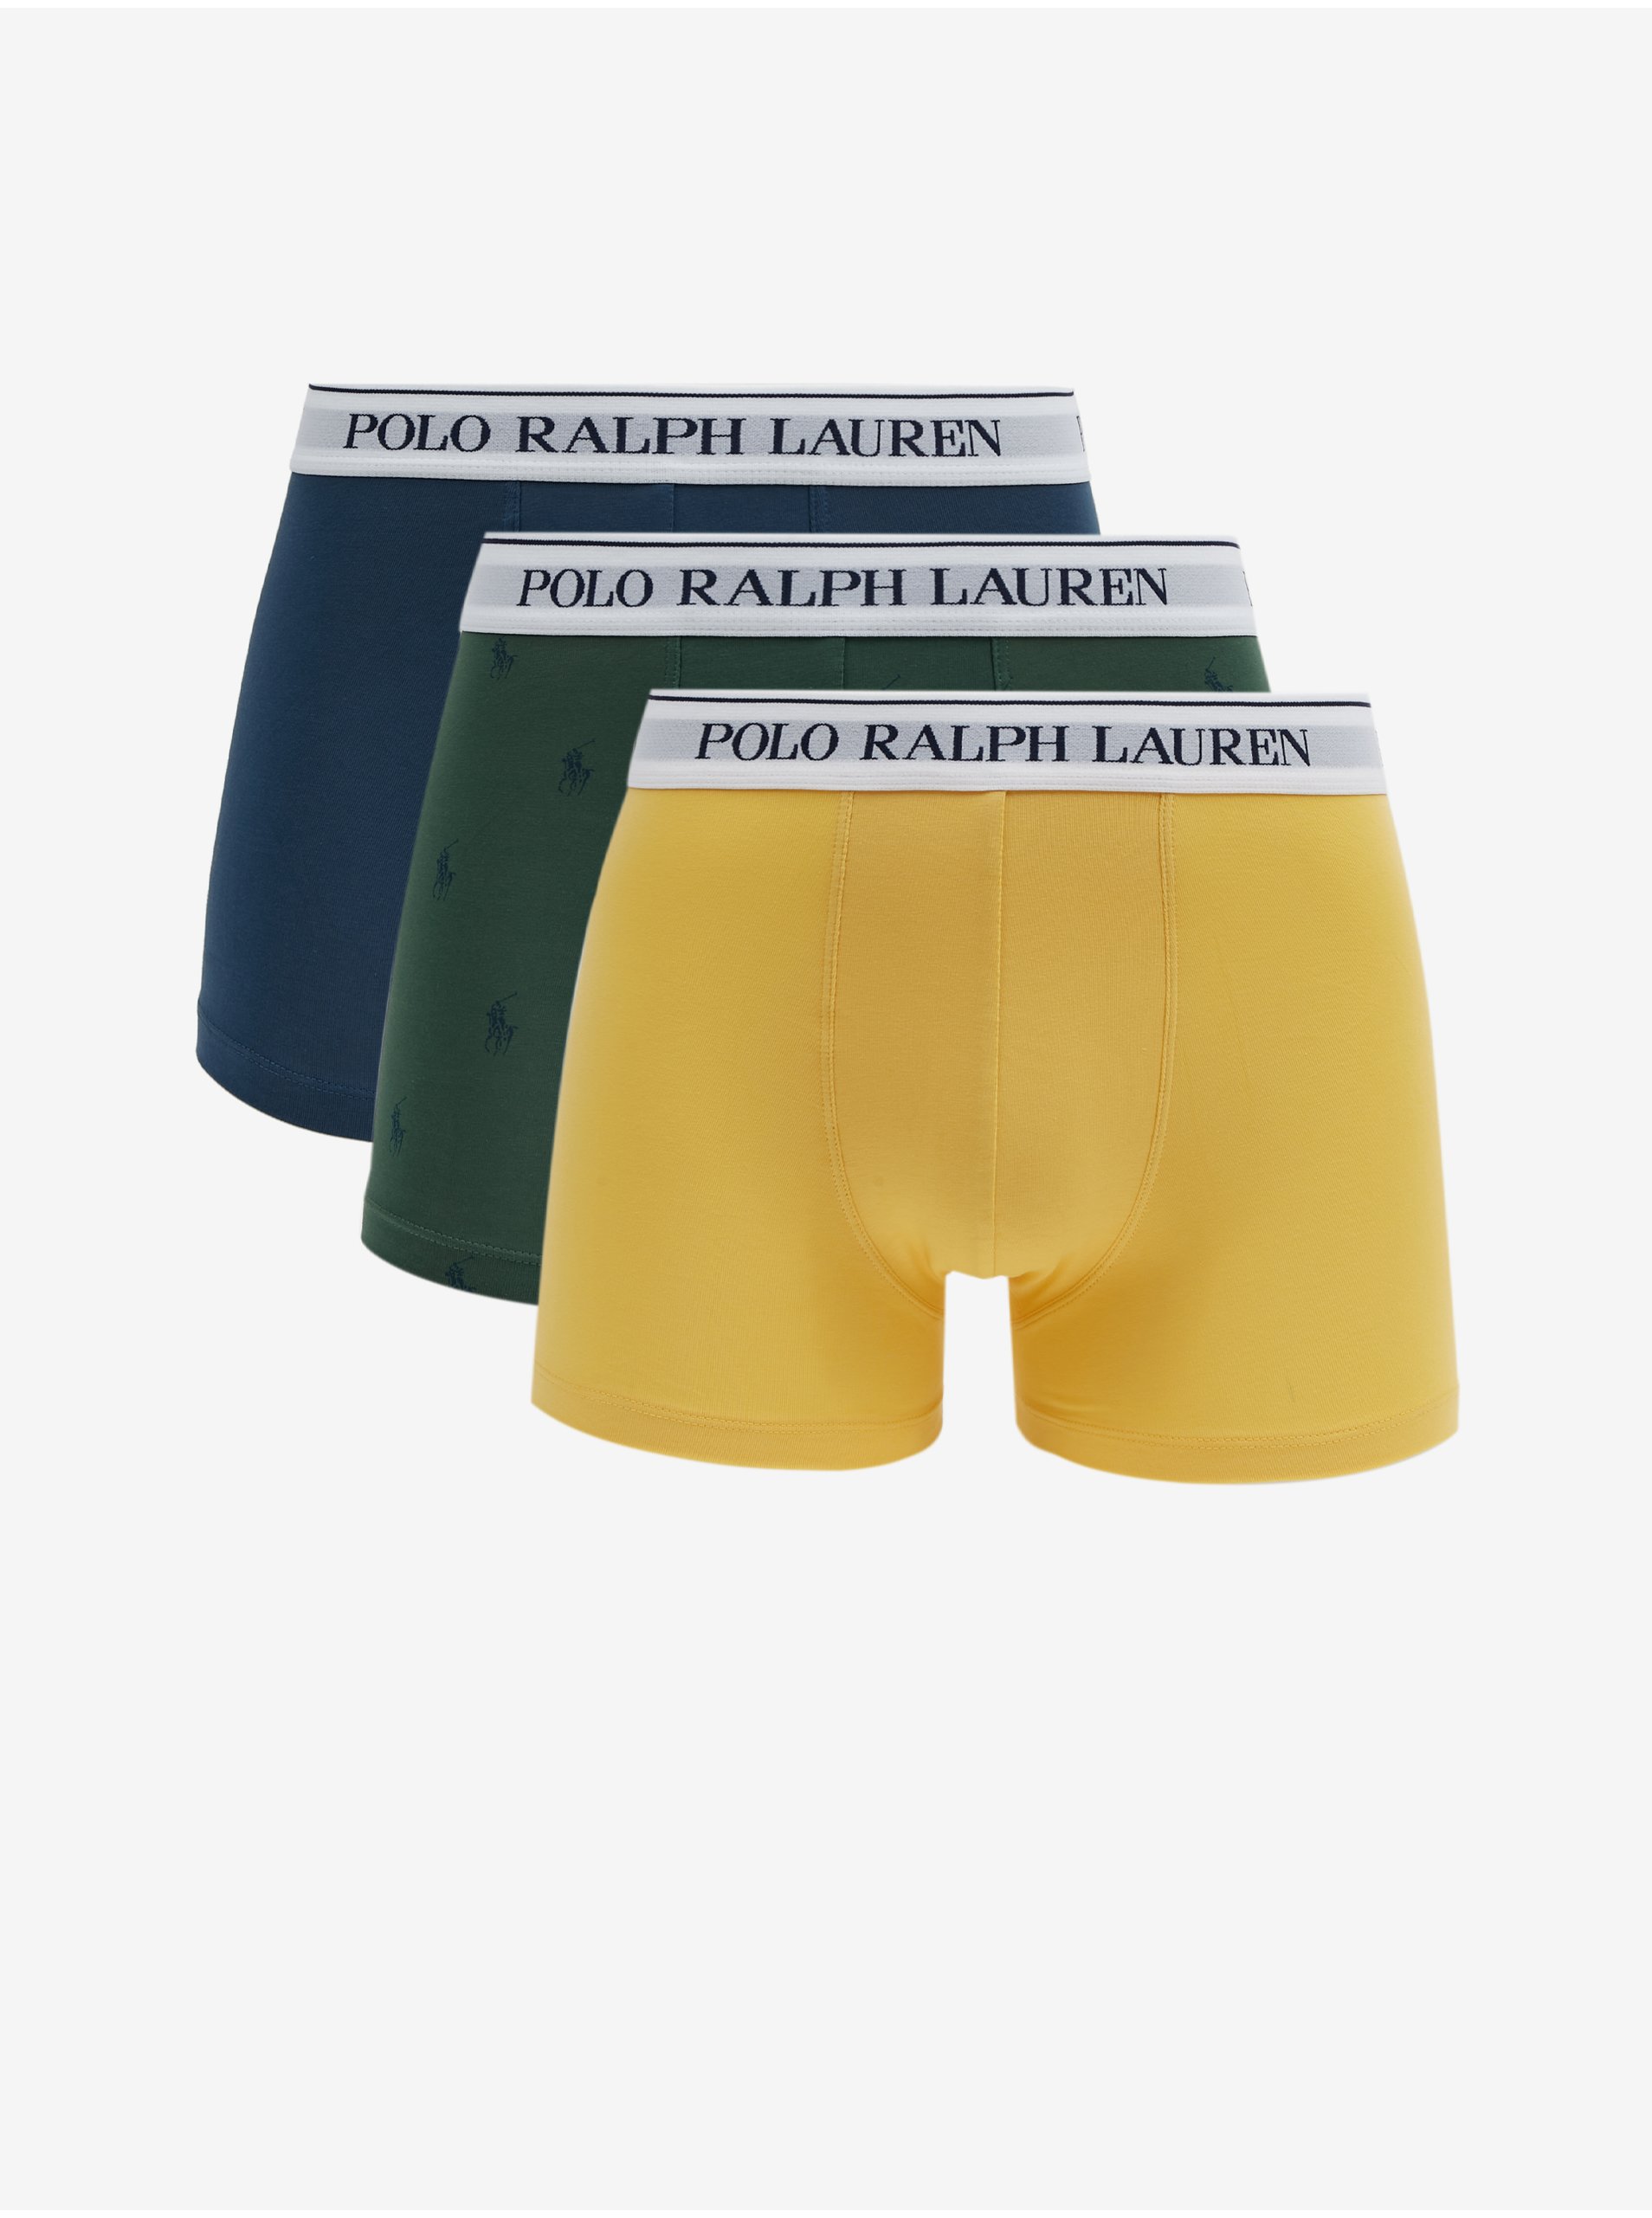 Lacno Boxerky pre mužov POLO Ralph Lauren - tmavomodrá, zelená, žltá